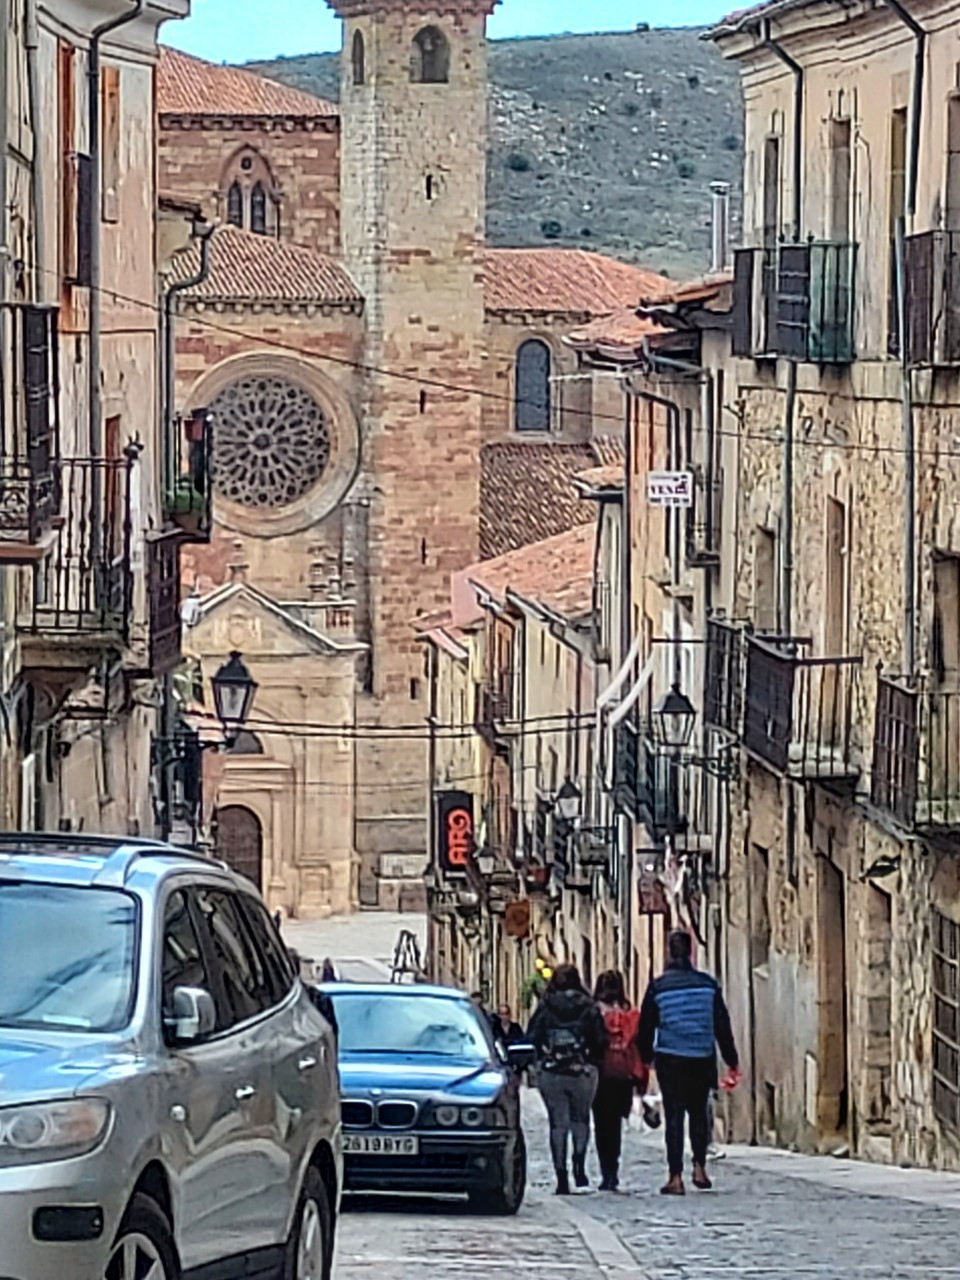 Calles empinadas que llevan a la Catedral